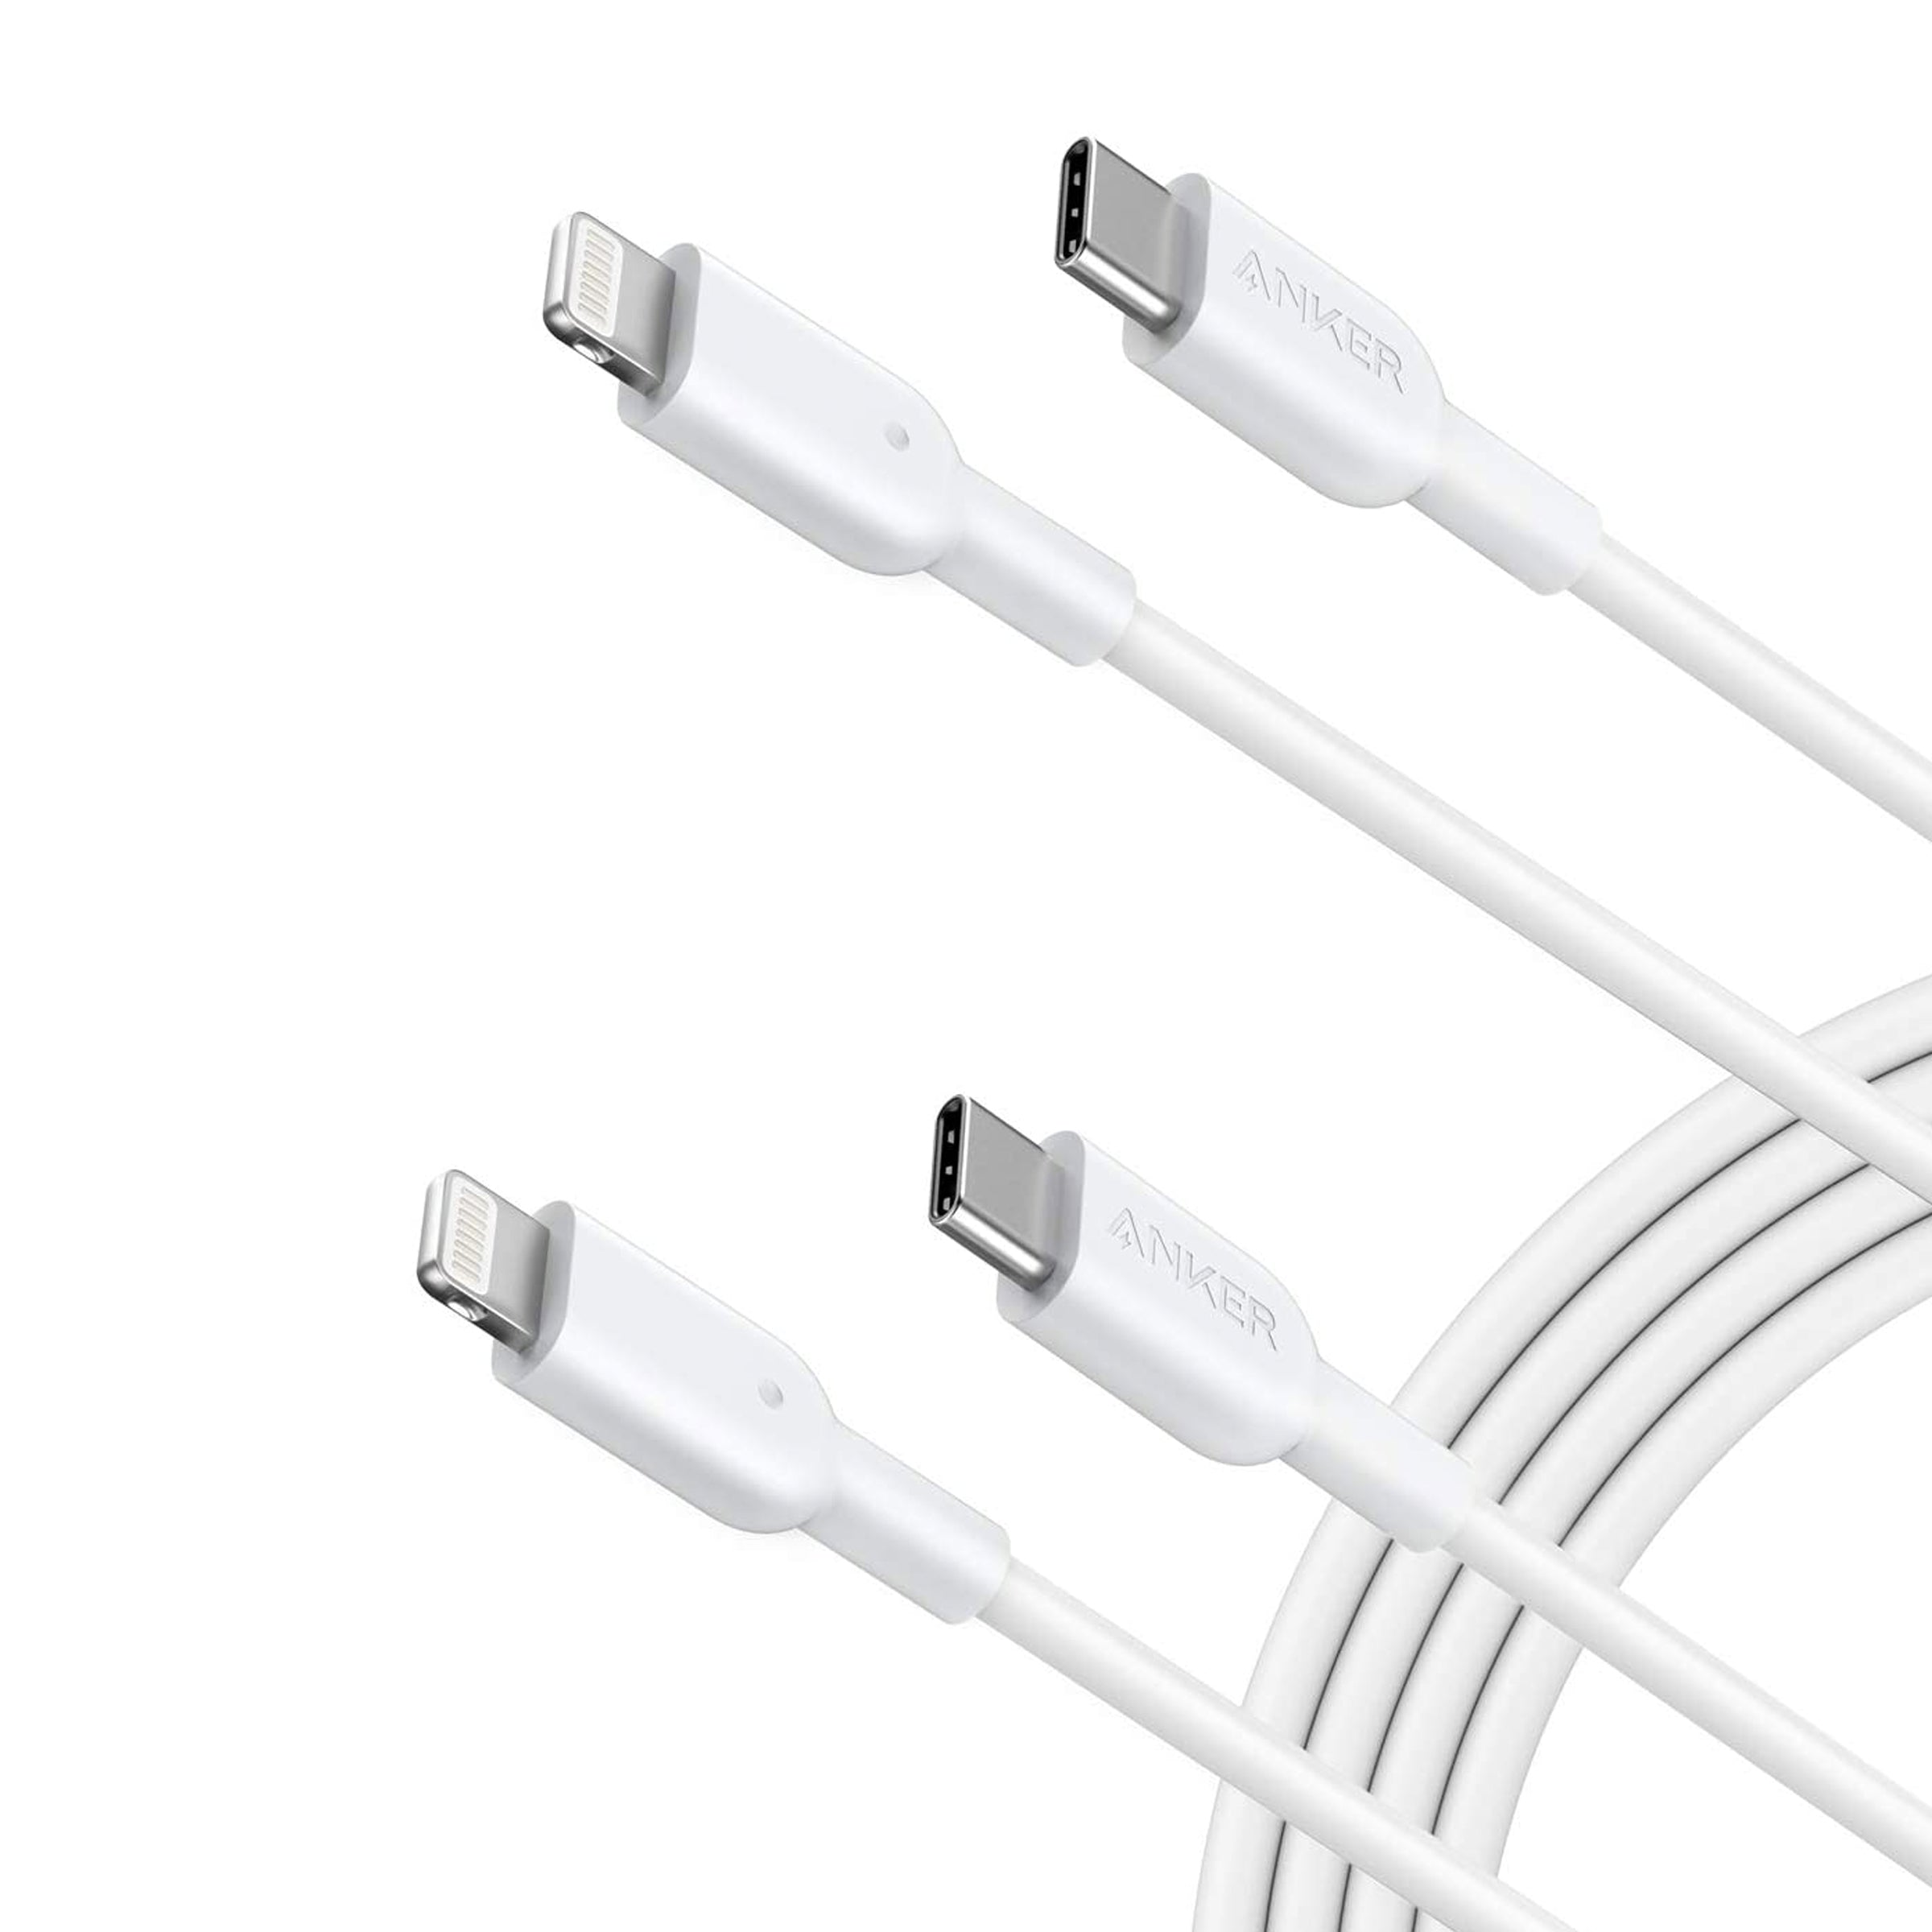 Anker 321 USB-C to Lightning Cable (6 ft, 2-Pack) - Anker US